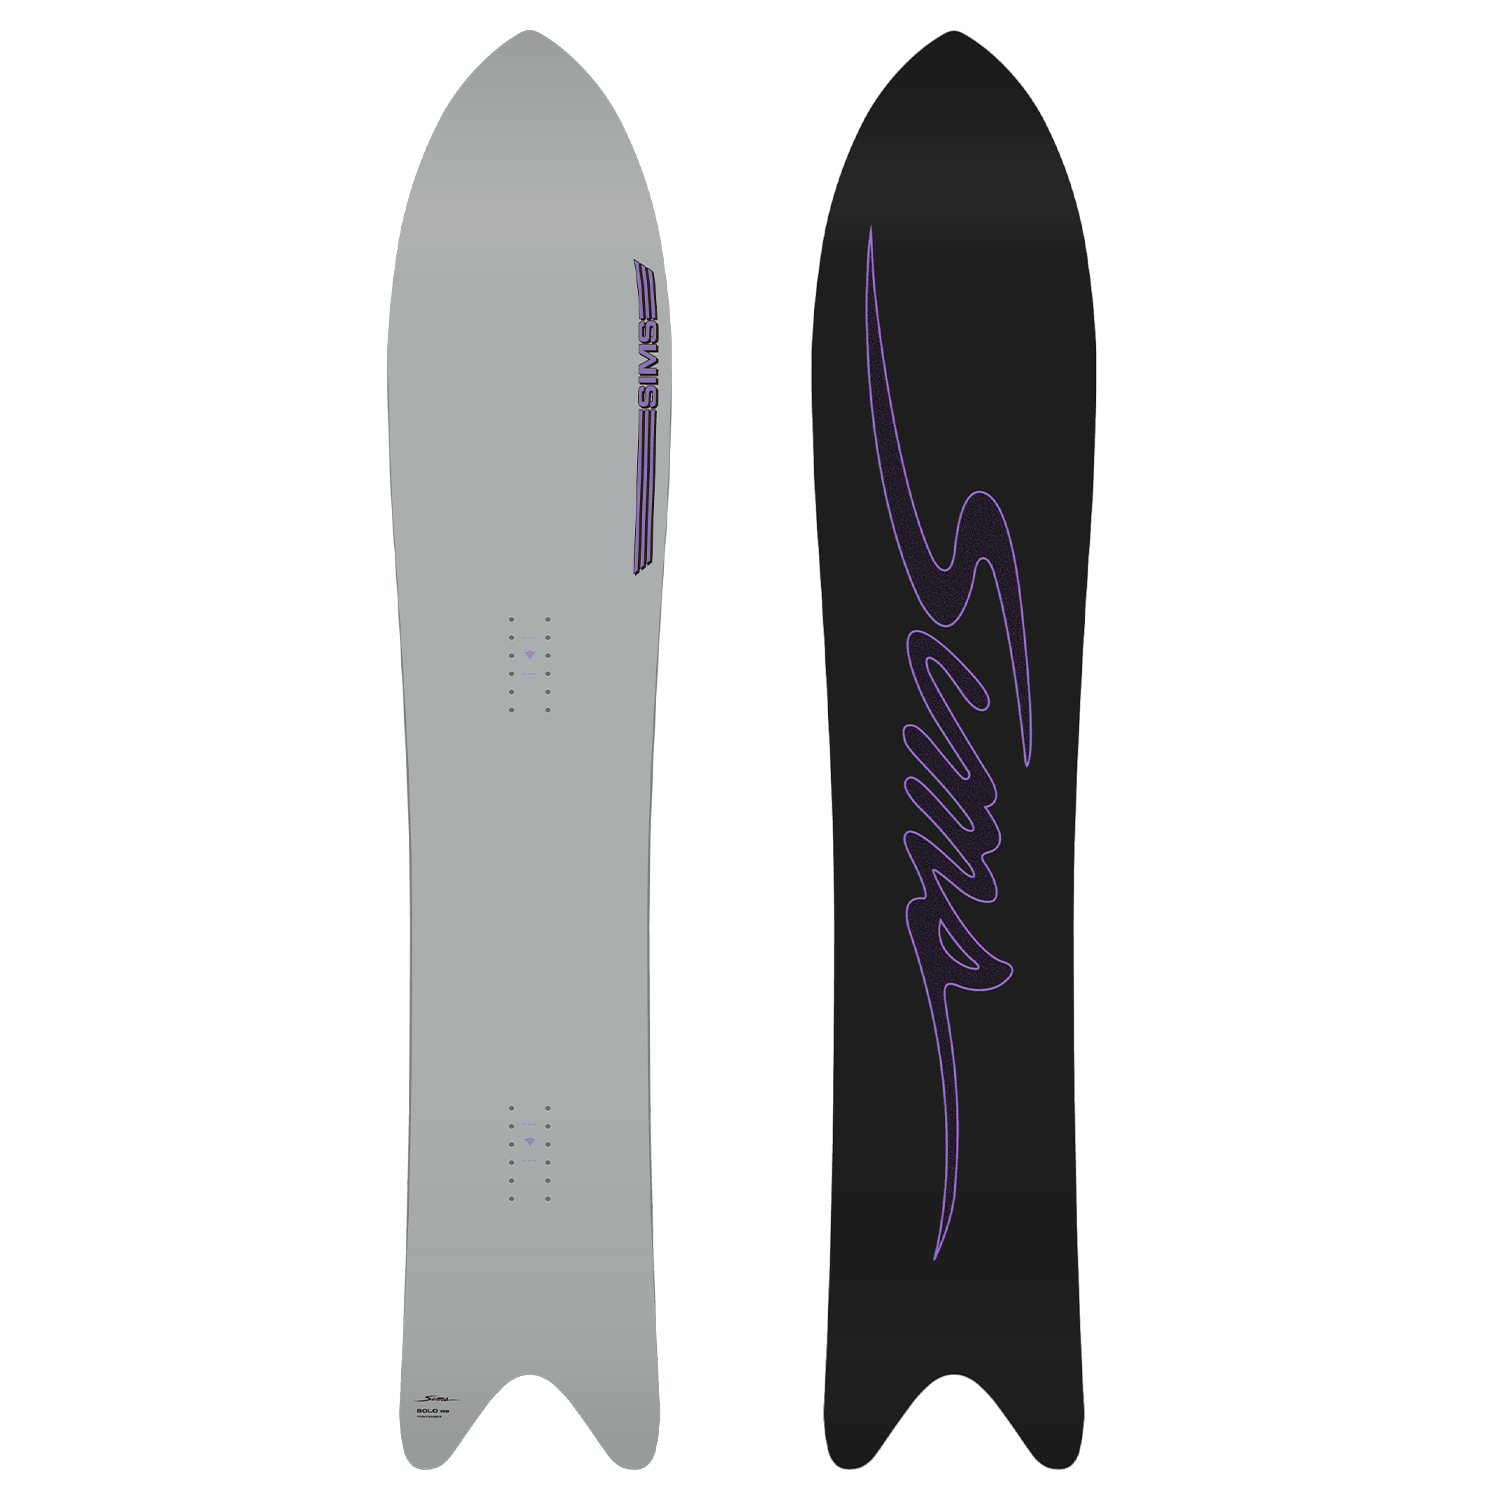 SIMS SOLO 156cm(18-19) - スノーボード